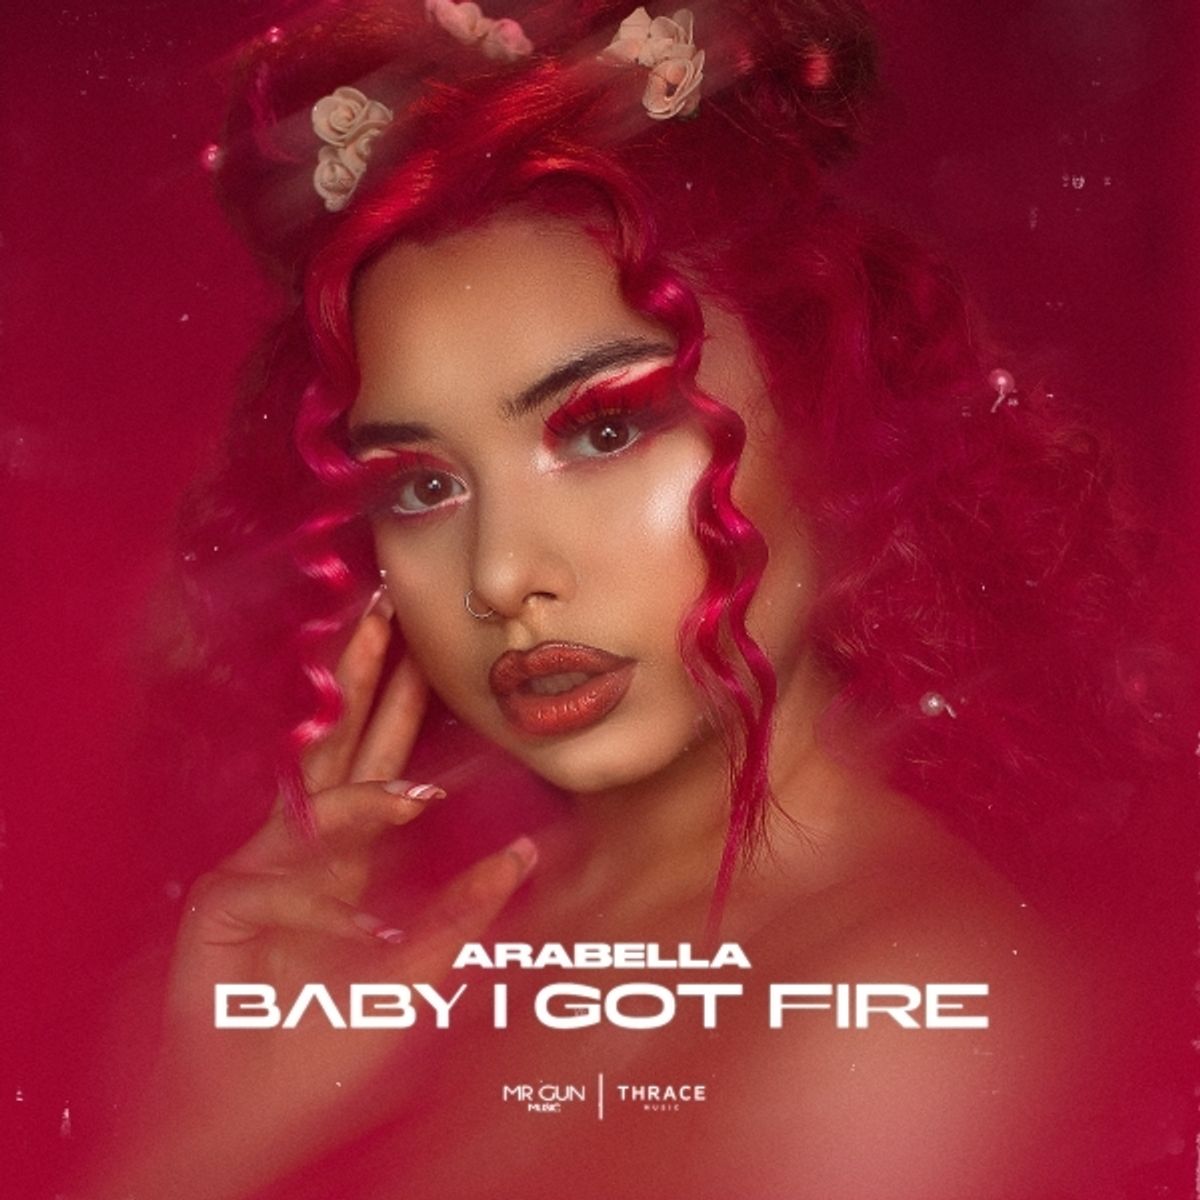 Arabella Baby I Got Fire cover artwork